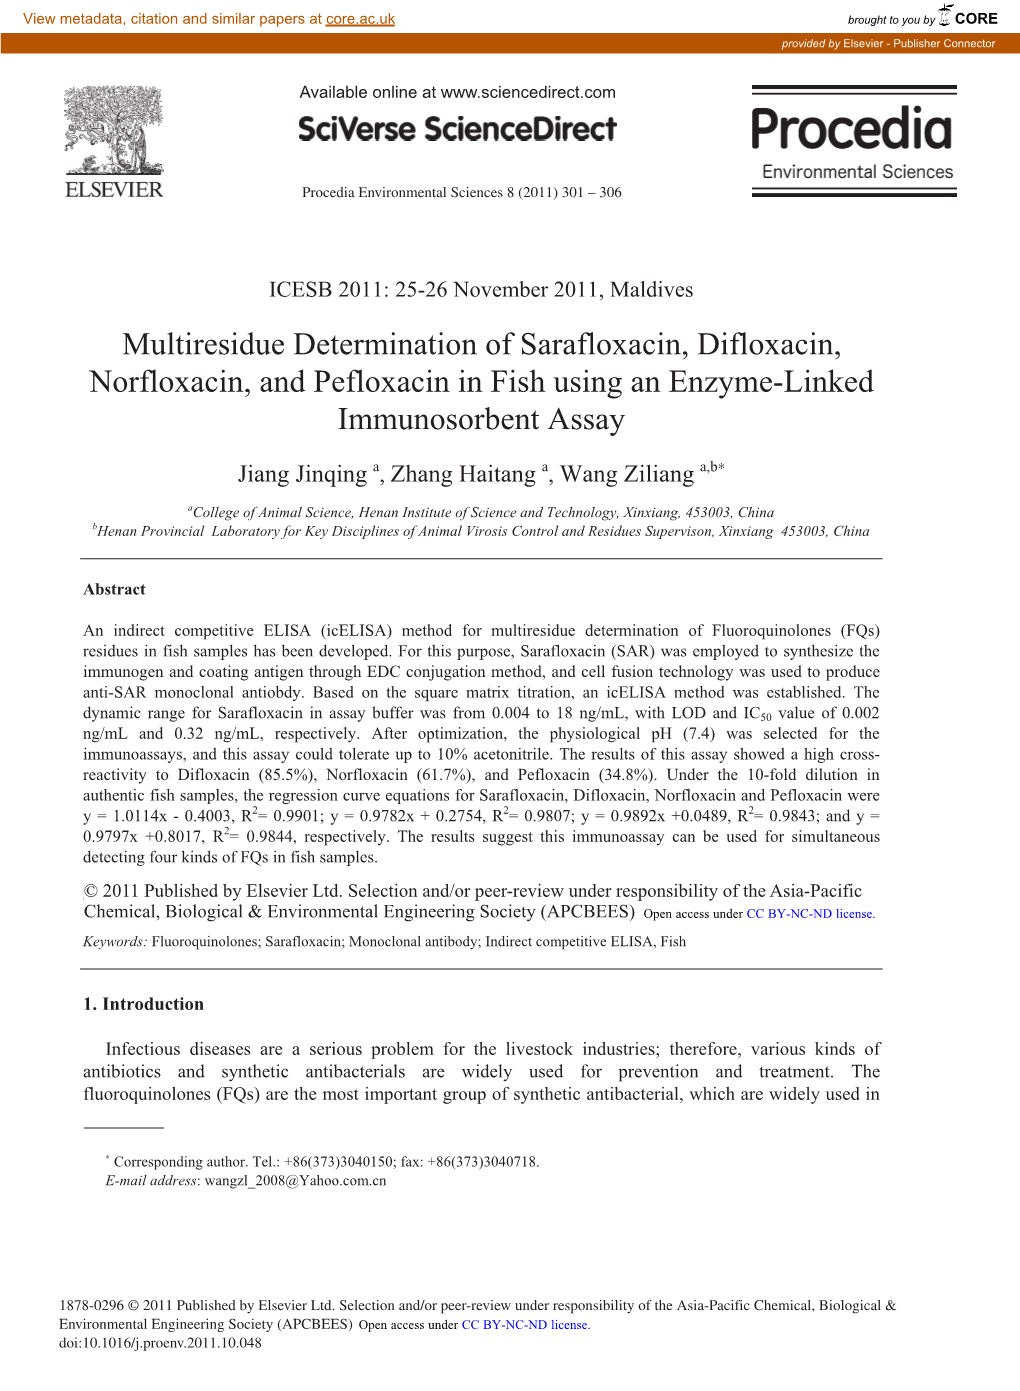 Multiresidue Determination of Sarafloxacin, Difloxacin, Norfloxacin, and Pefloxacin in Fish Using an Enzyme-Linked Immunosorbent Assay